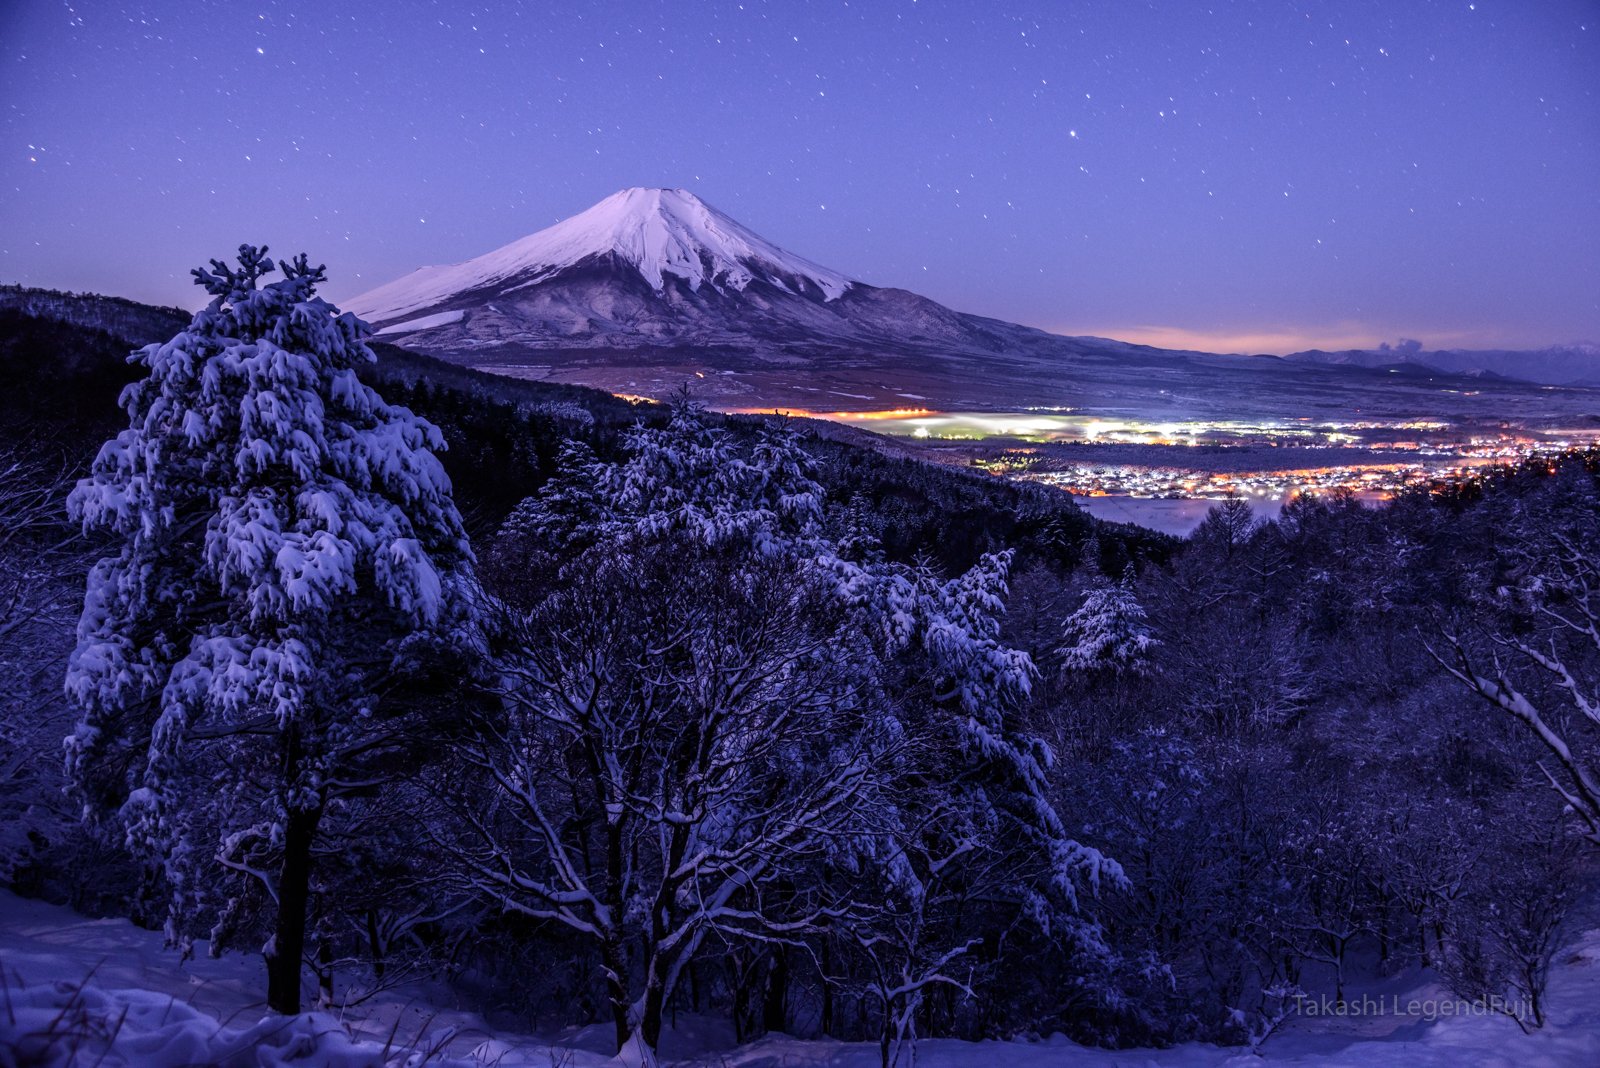 Fuji,mountain,Japan,night,snow,winter,beautiful,amazing,star,blue,moonlight,cloud, Takashi